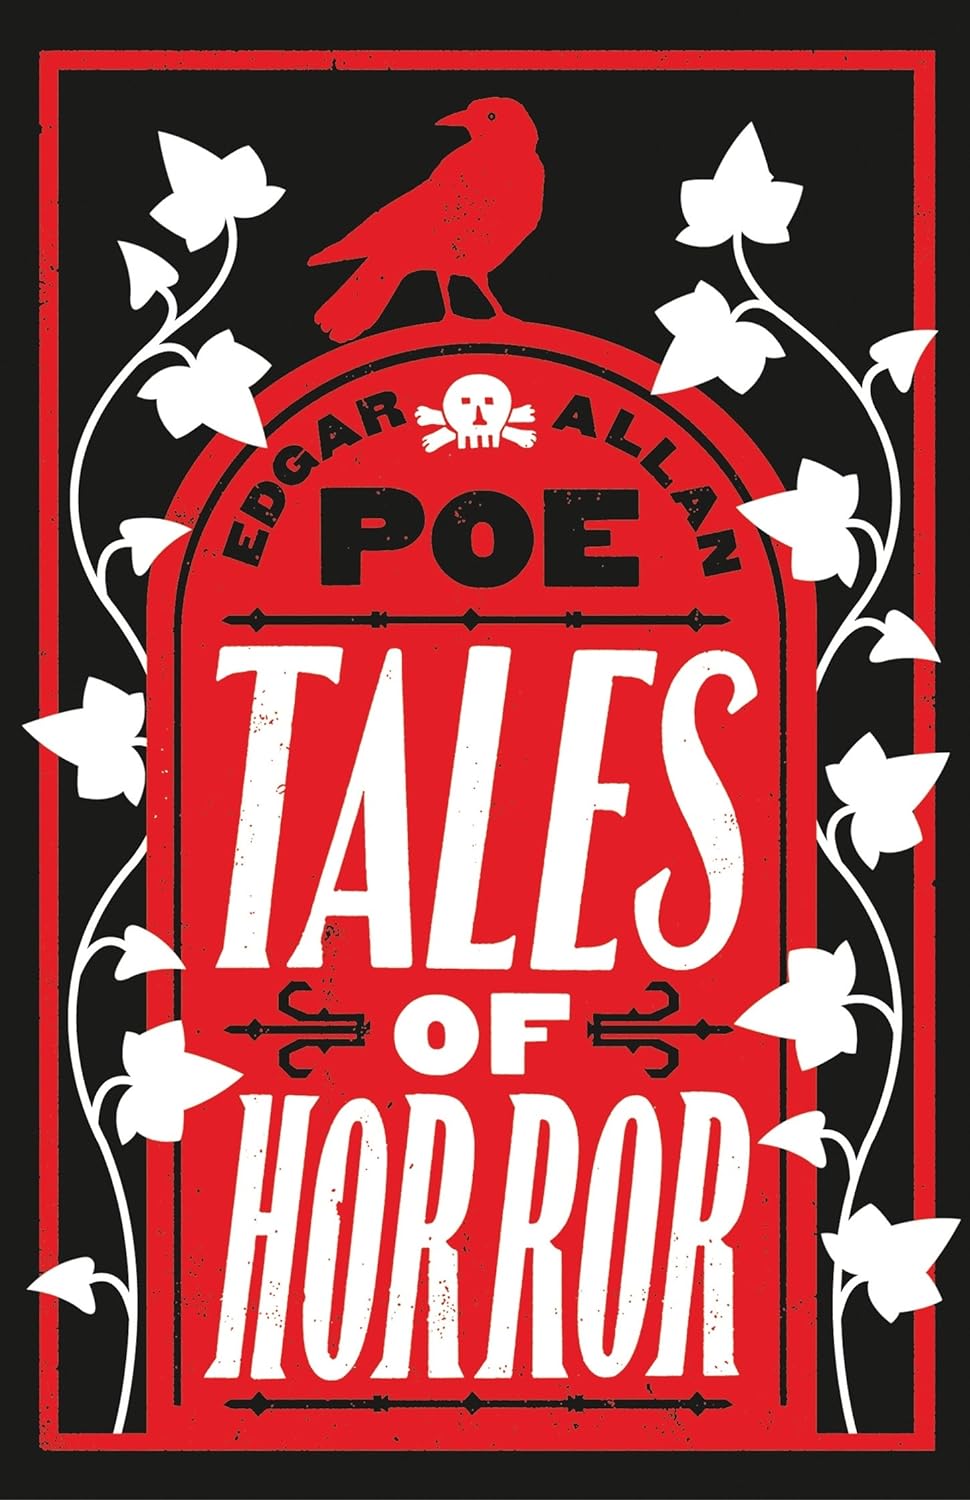 Poe Edgar Allan Tales of Horror 